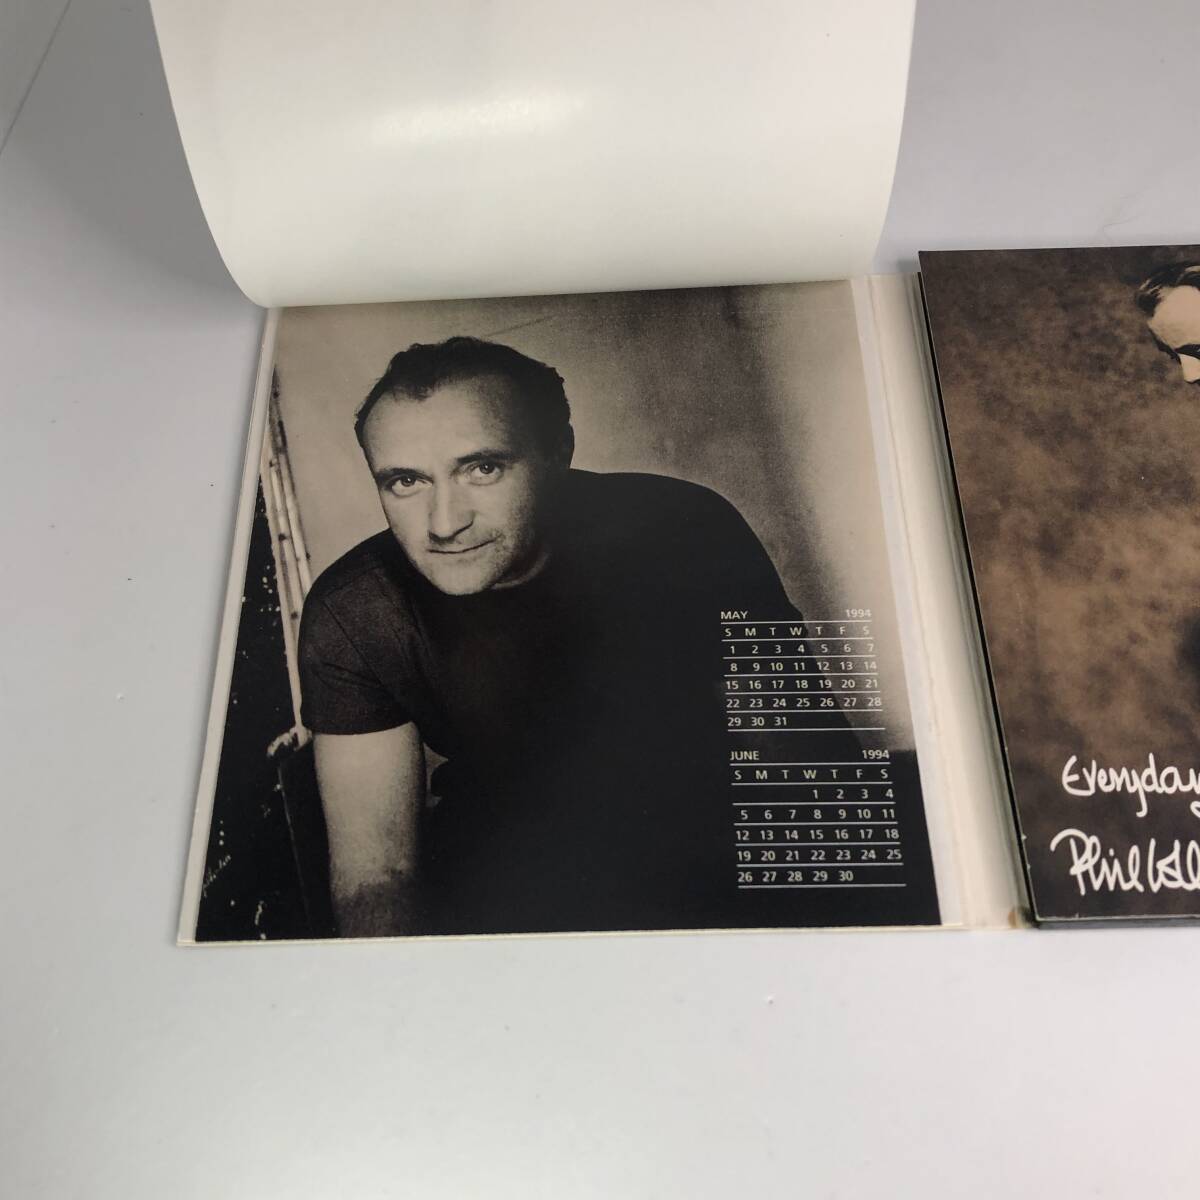 UK盤 中古CD カレンダー付き Phil Collins Everyday フィル・コリンズ エヴリデイ Virgin VSCDG1505 個人所有 B_画像5